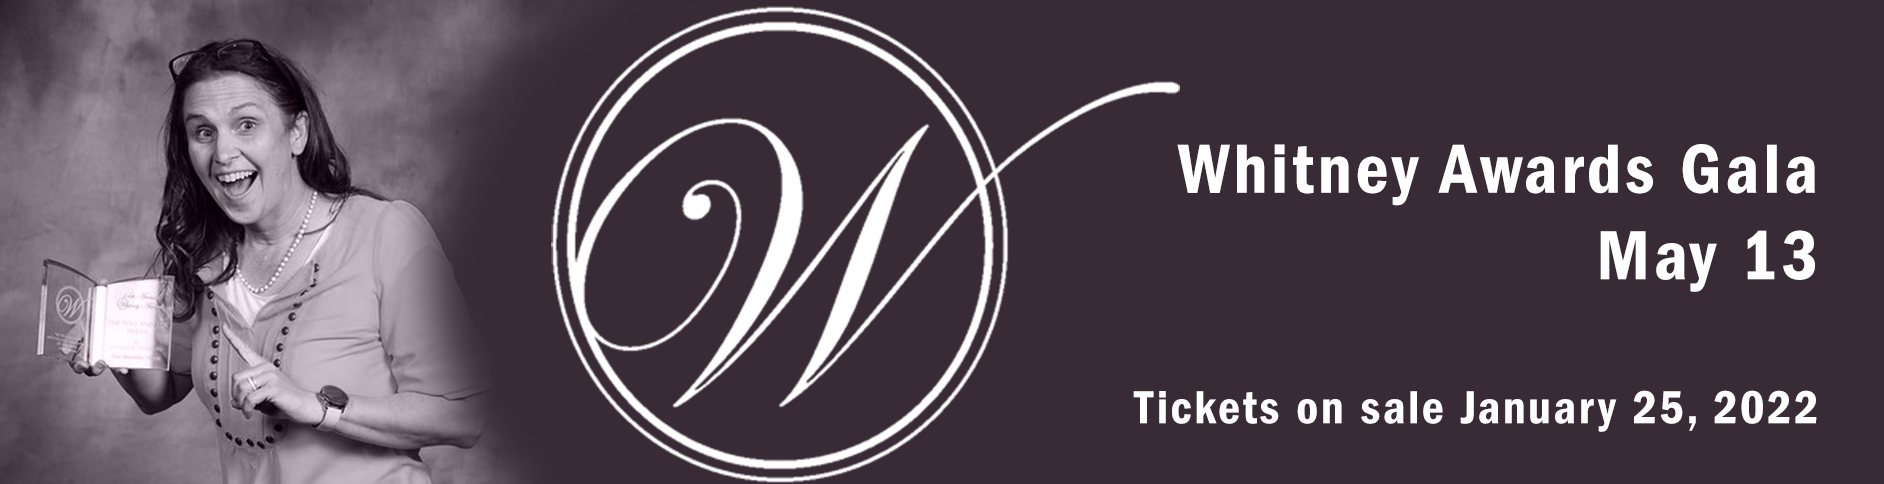 Whitney Awards Gala May 13 Tickets on sale January 25, 2022